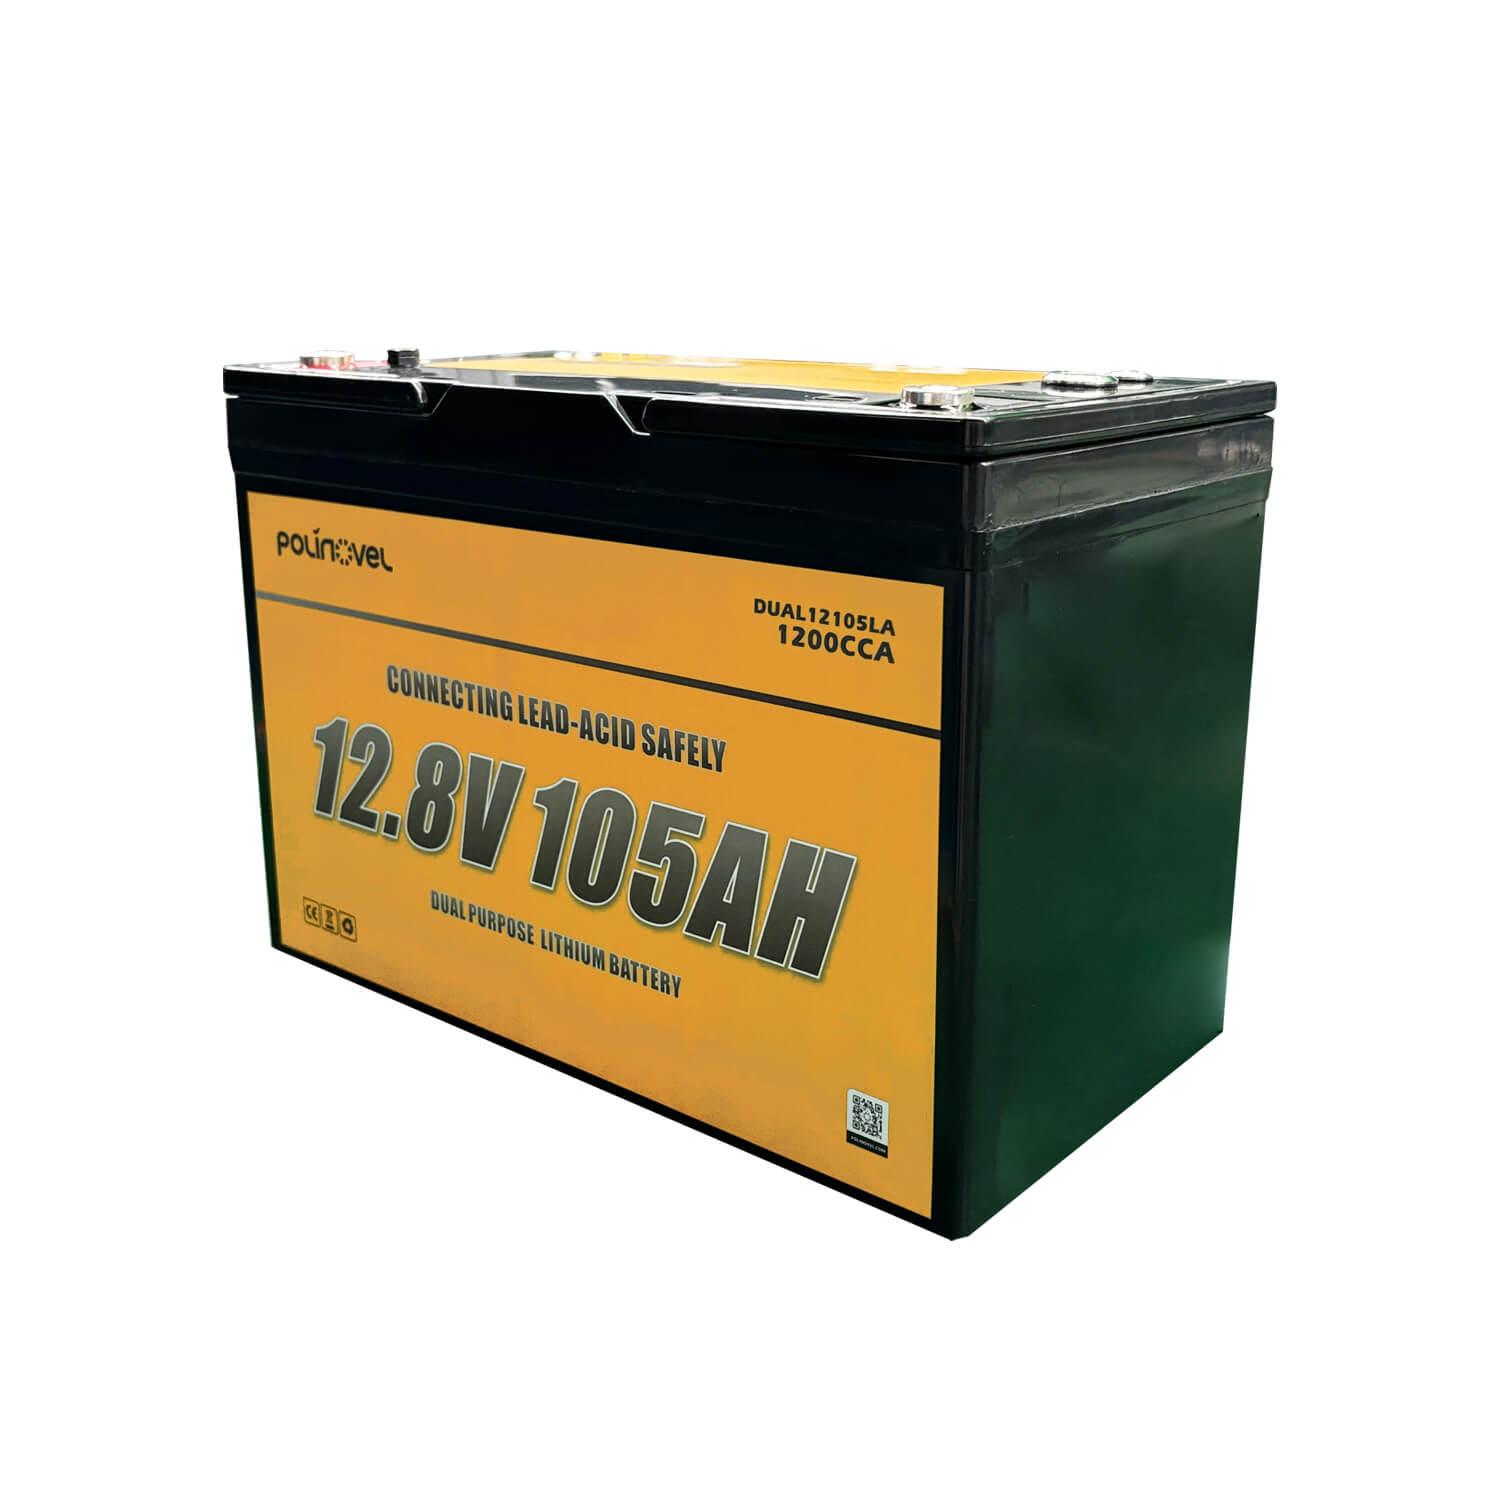 12V 105Ah Dual Purpose LiFePO4 Battery DUAL12105LA